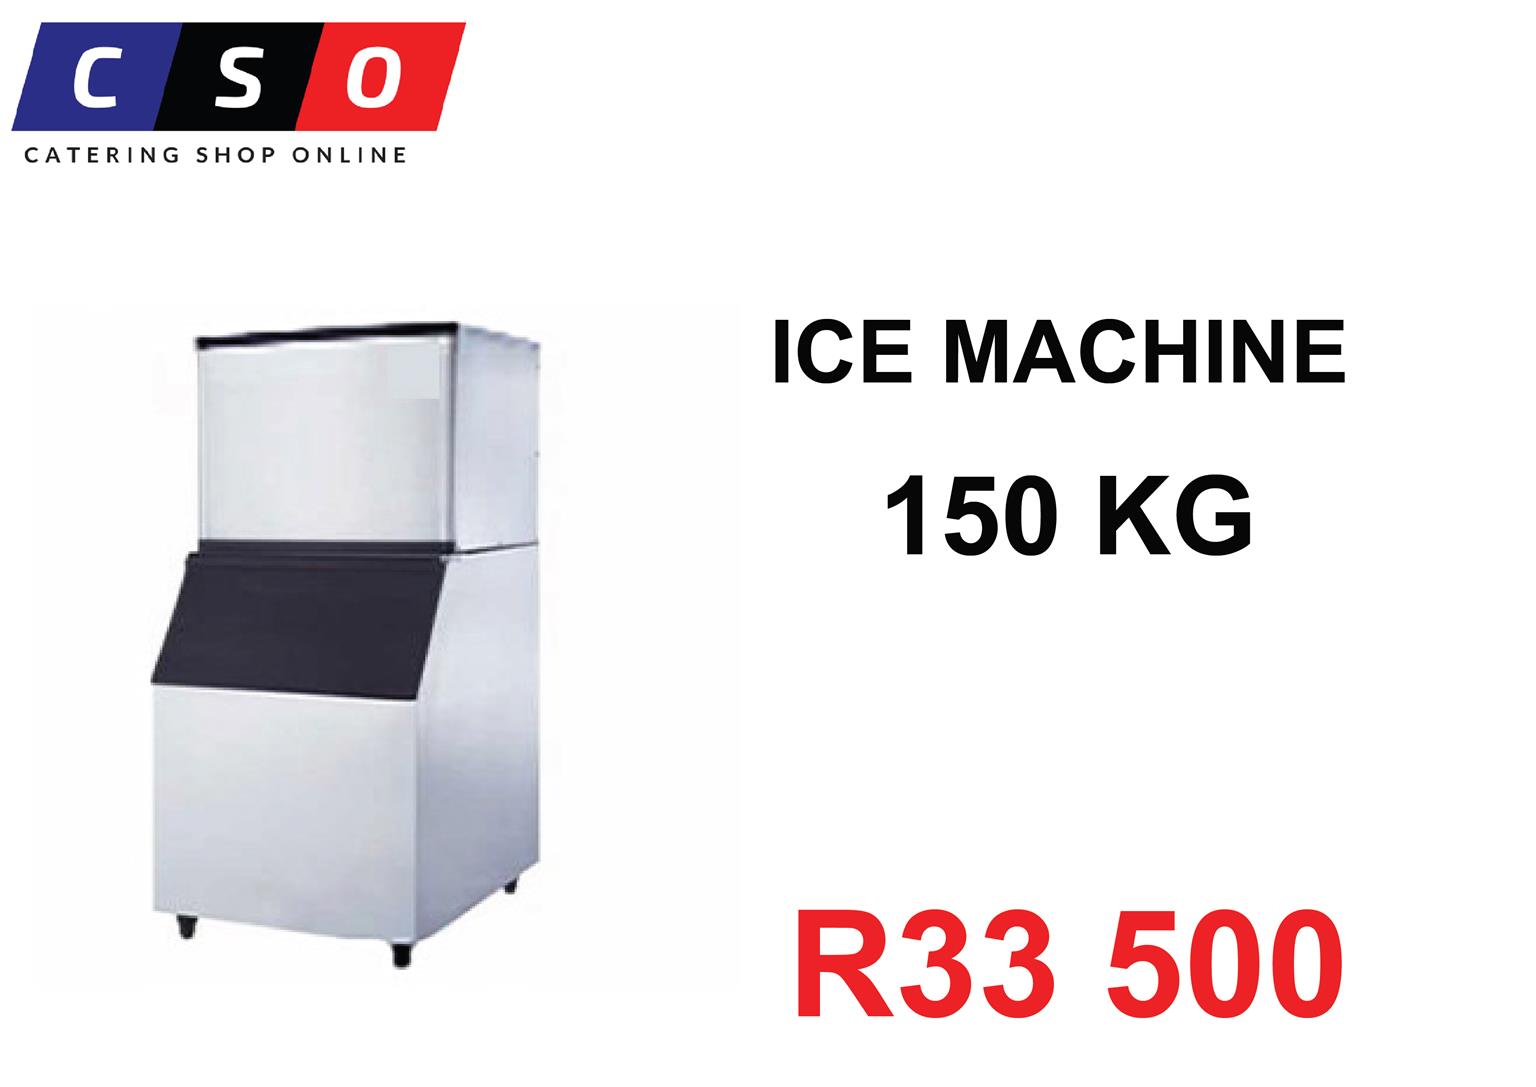 ICE MACHINE SPECIAL DEALS LOW PRICE